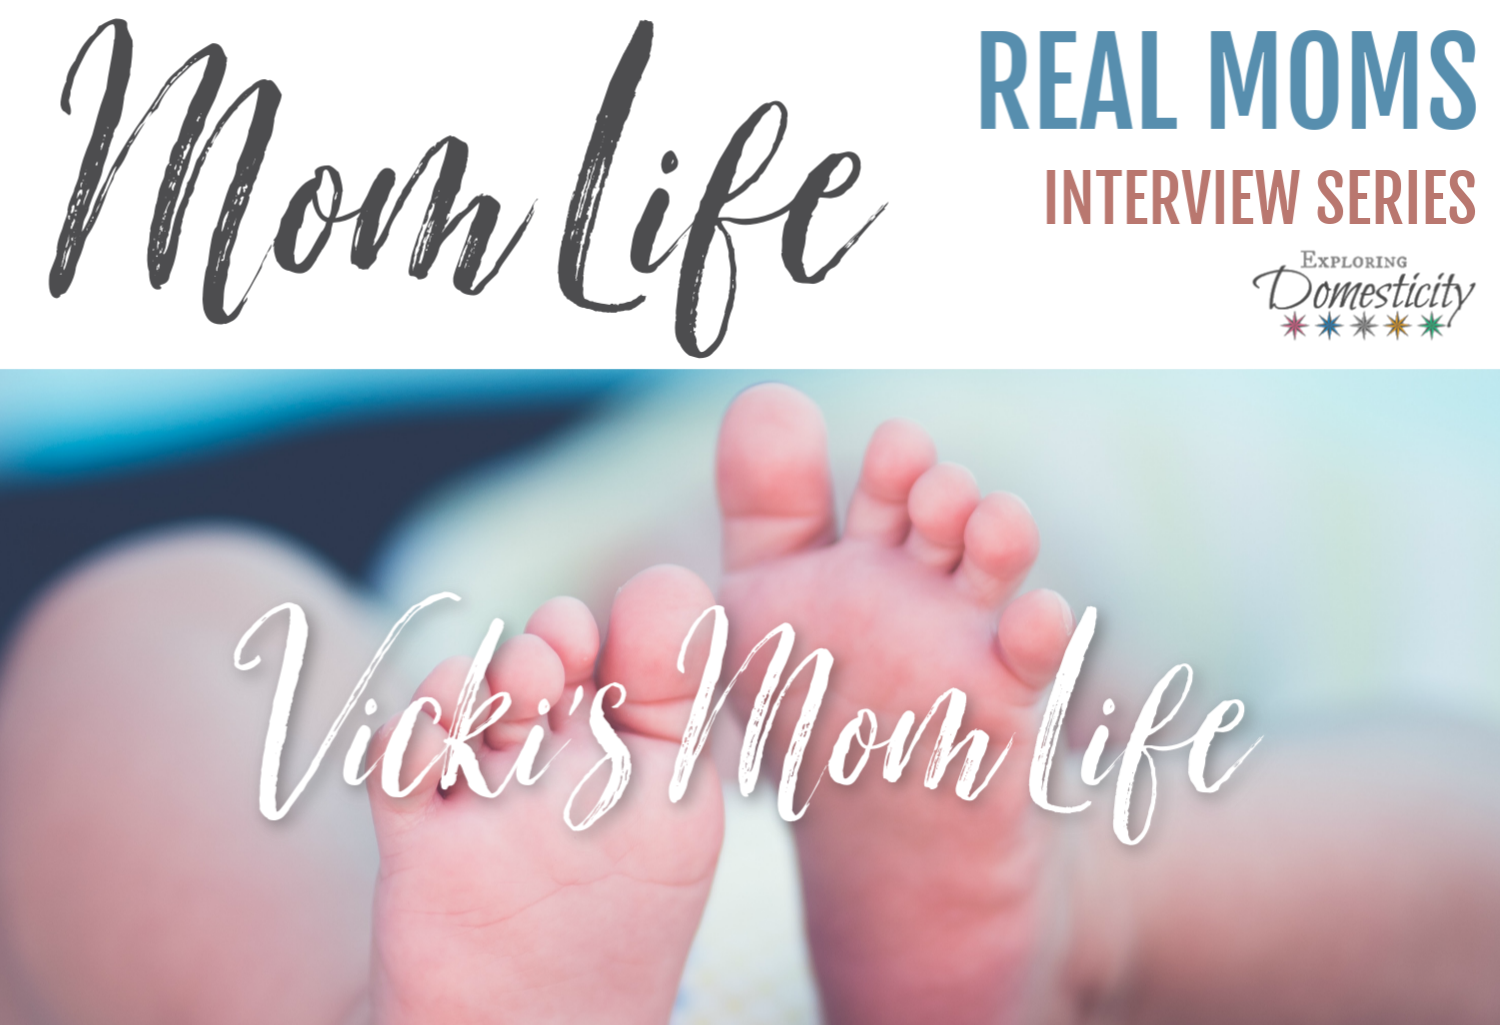 Vicki's Mom Life - Real Moms Interview Series